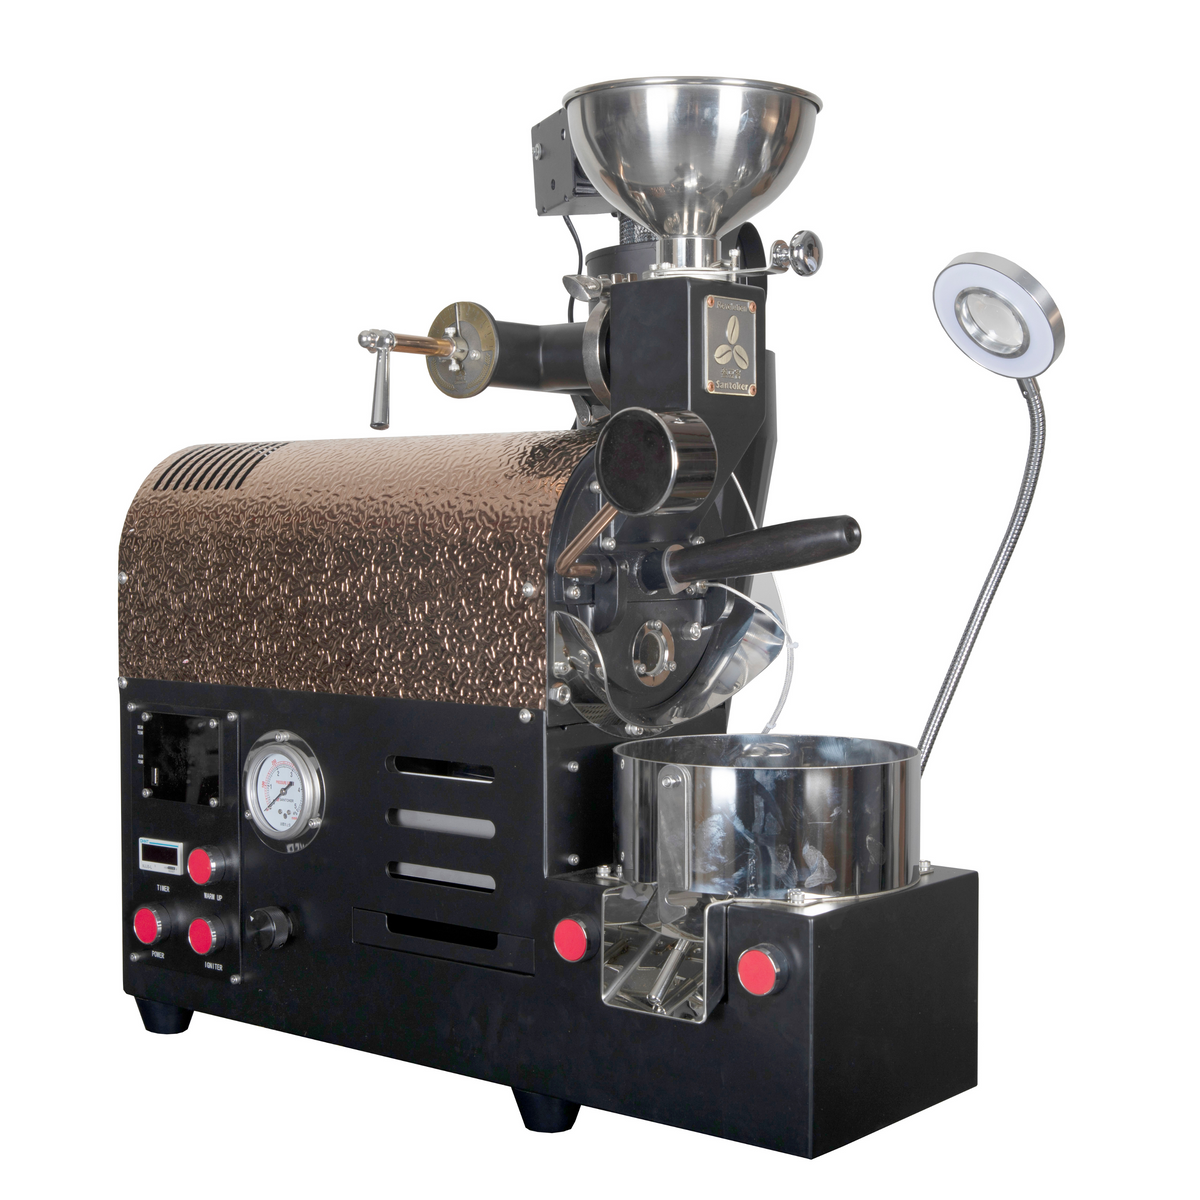 Santoker R300 Coffee Roaster - 500g/Batch